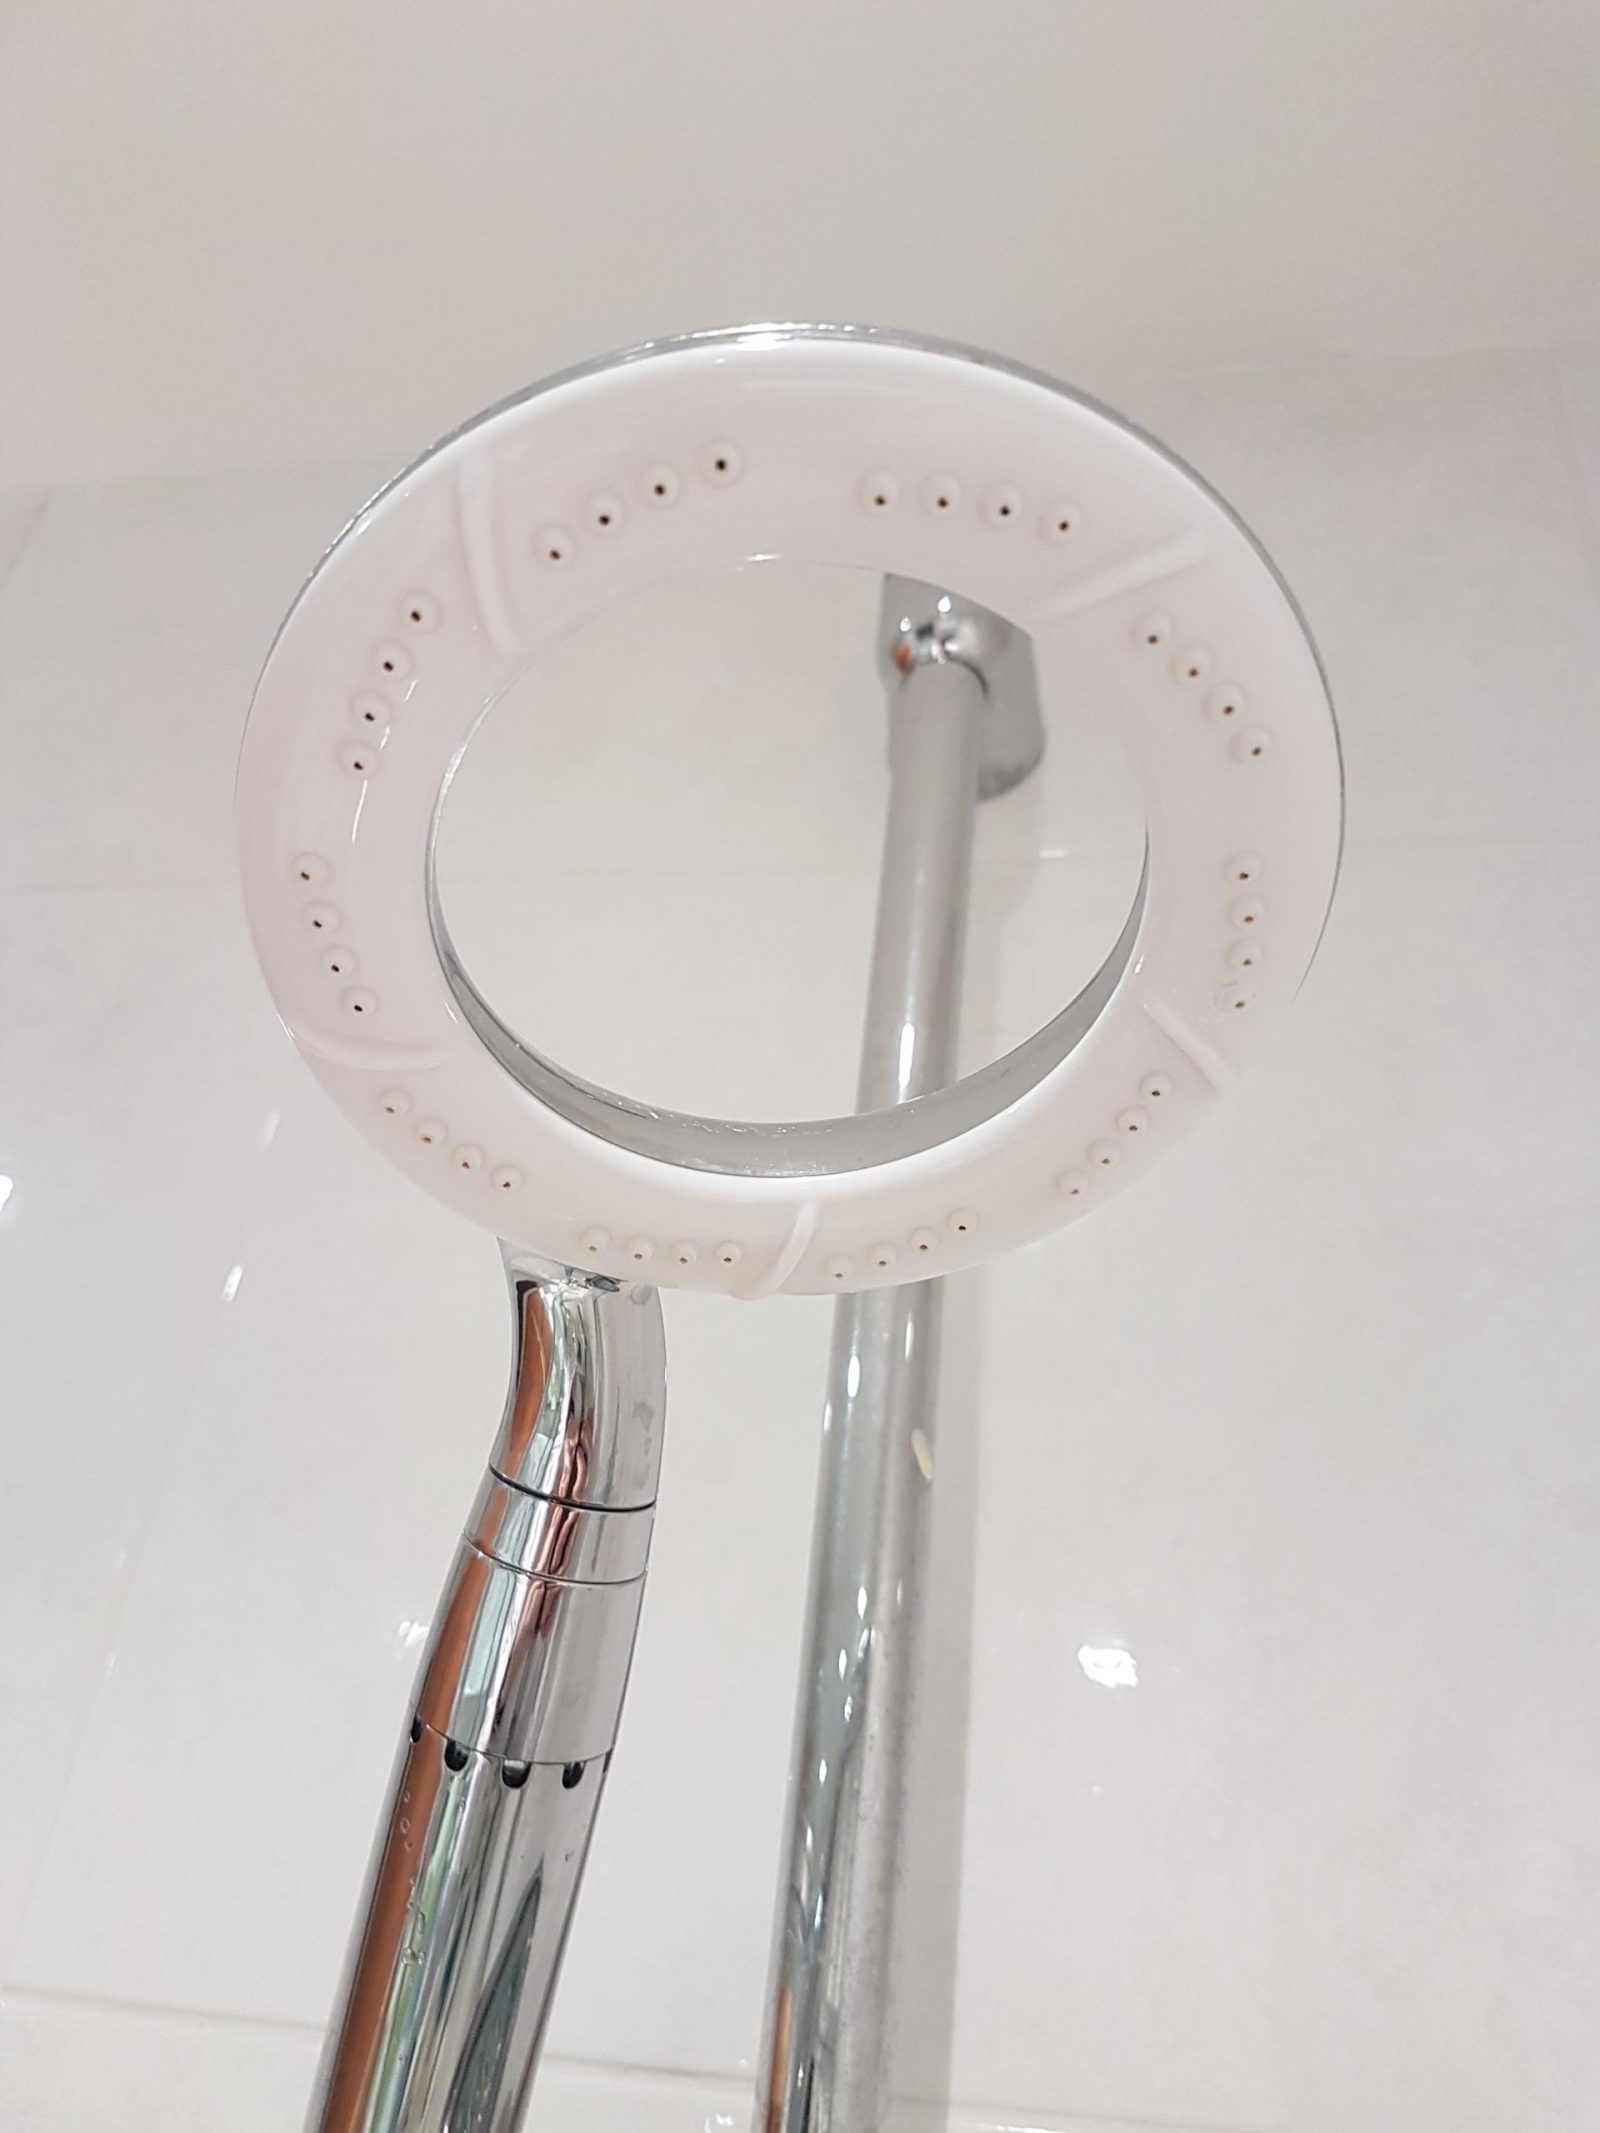 ecocamel Orbit shower head